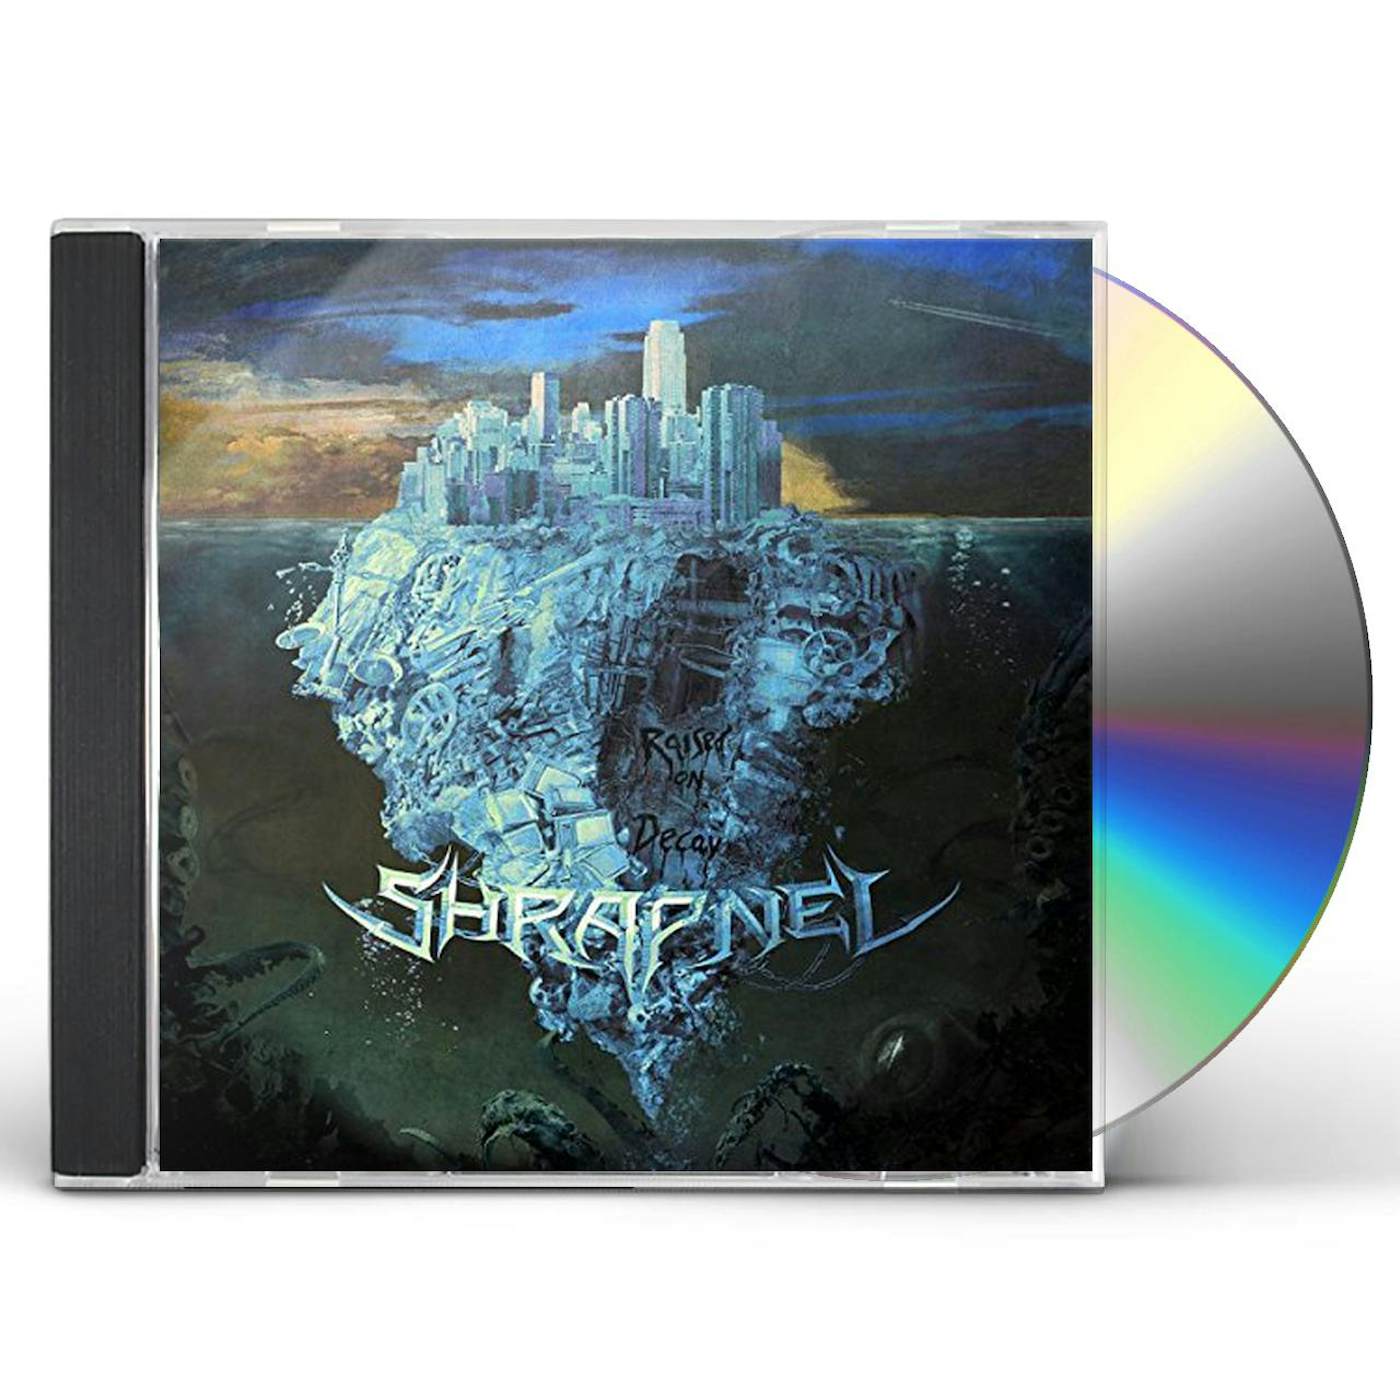 Shrapnel RAISED ON DECAY CD